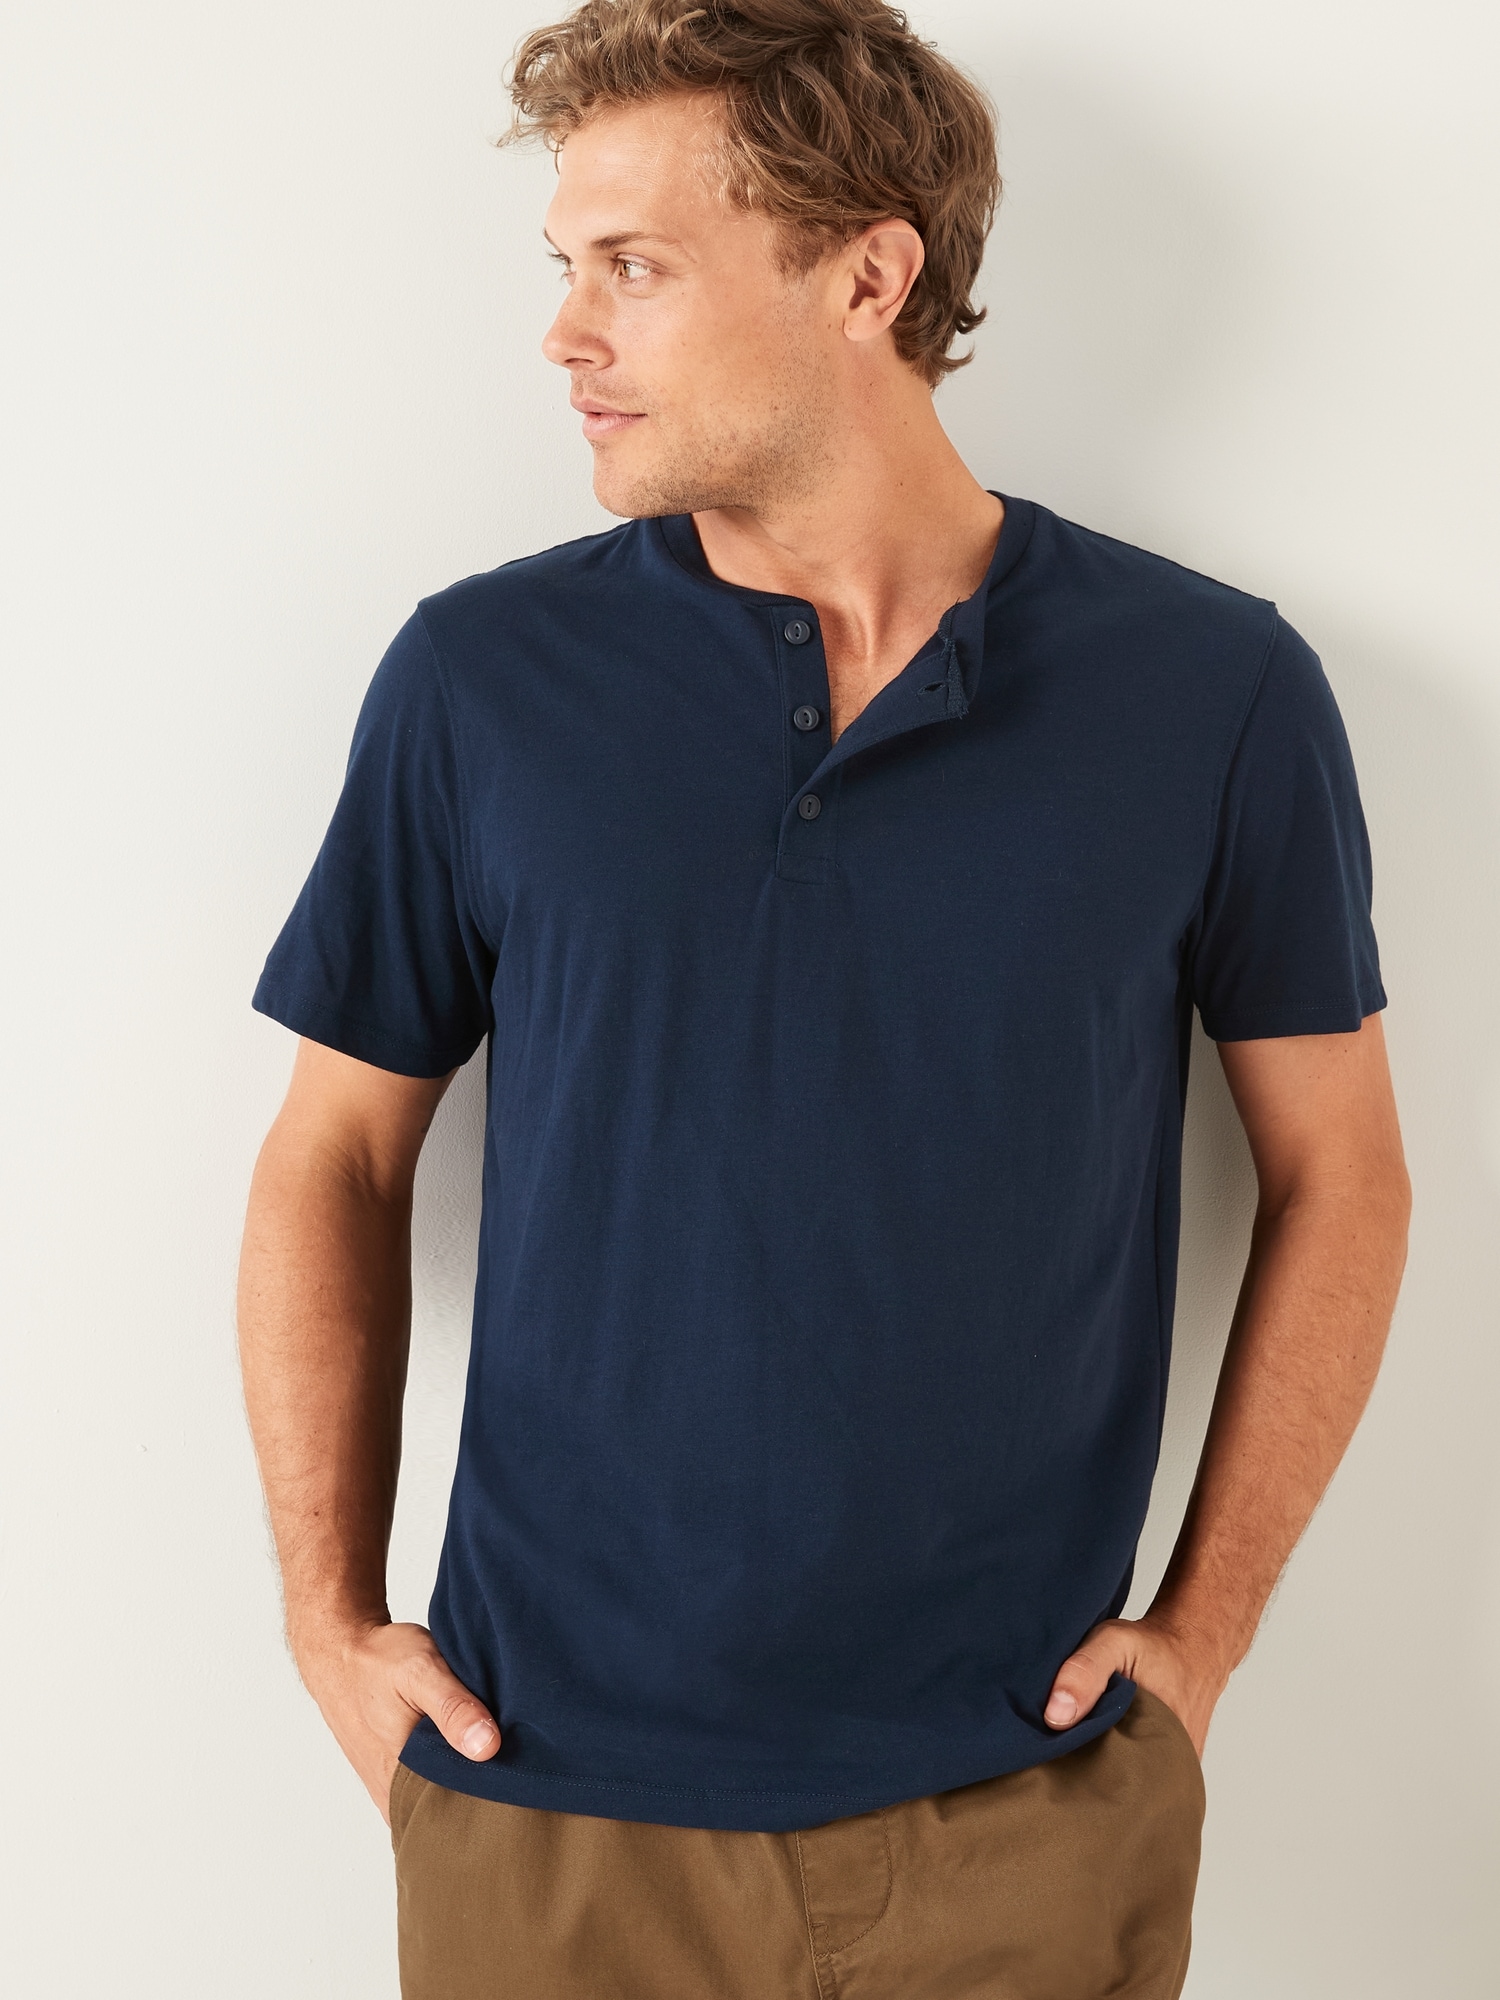 Soft-Washed Henley T-Shirt for Men | Old Navy